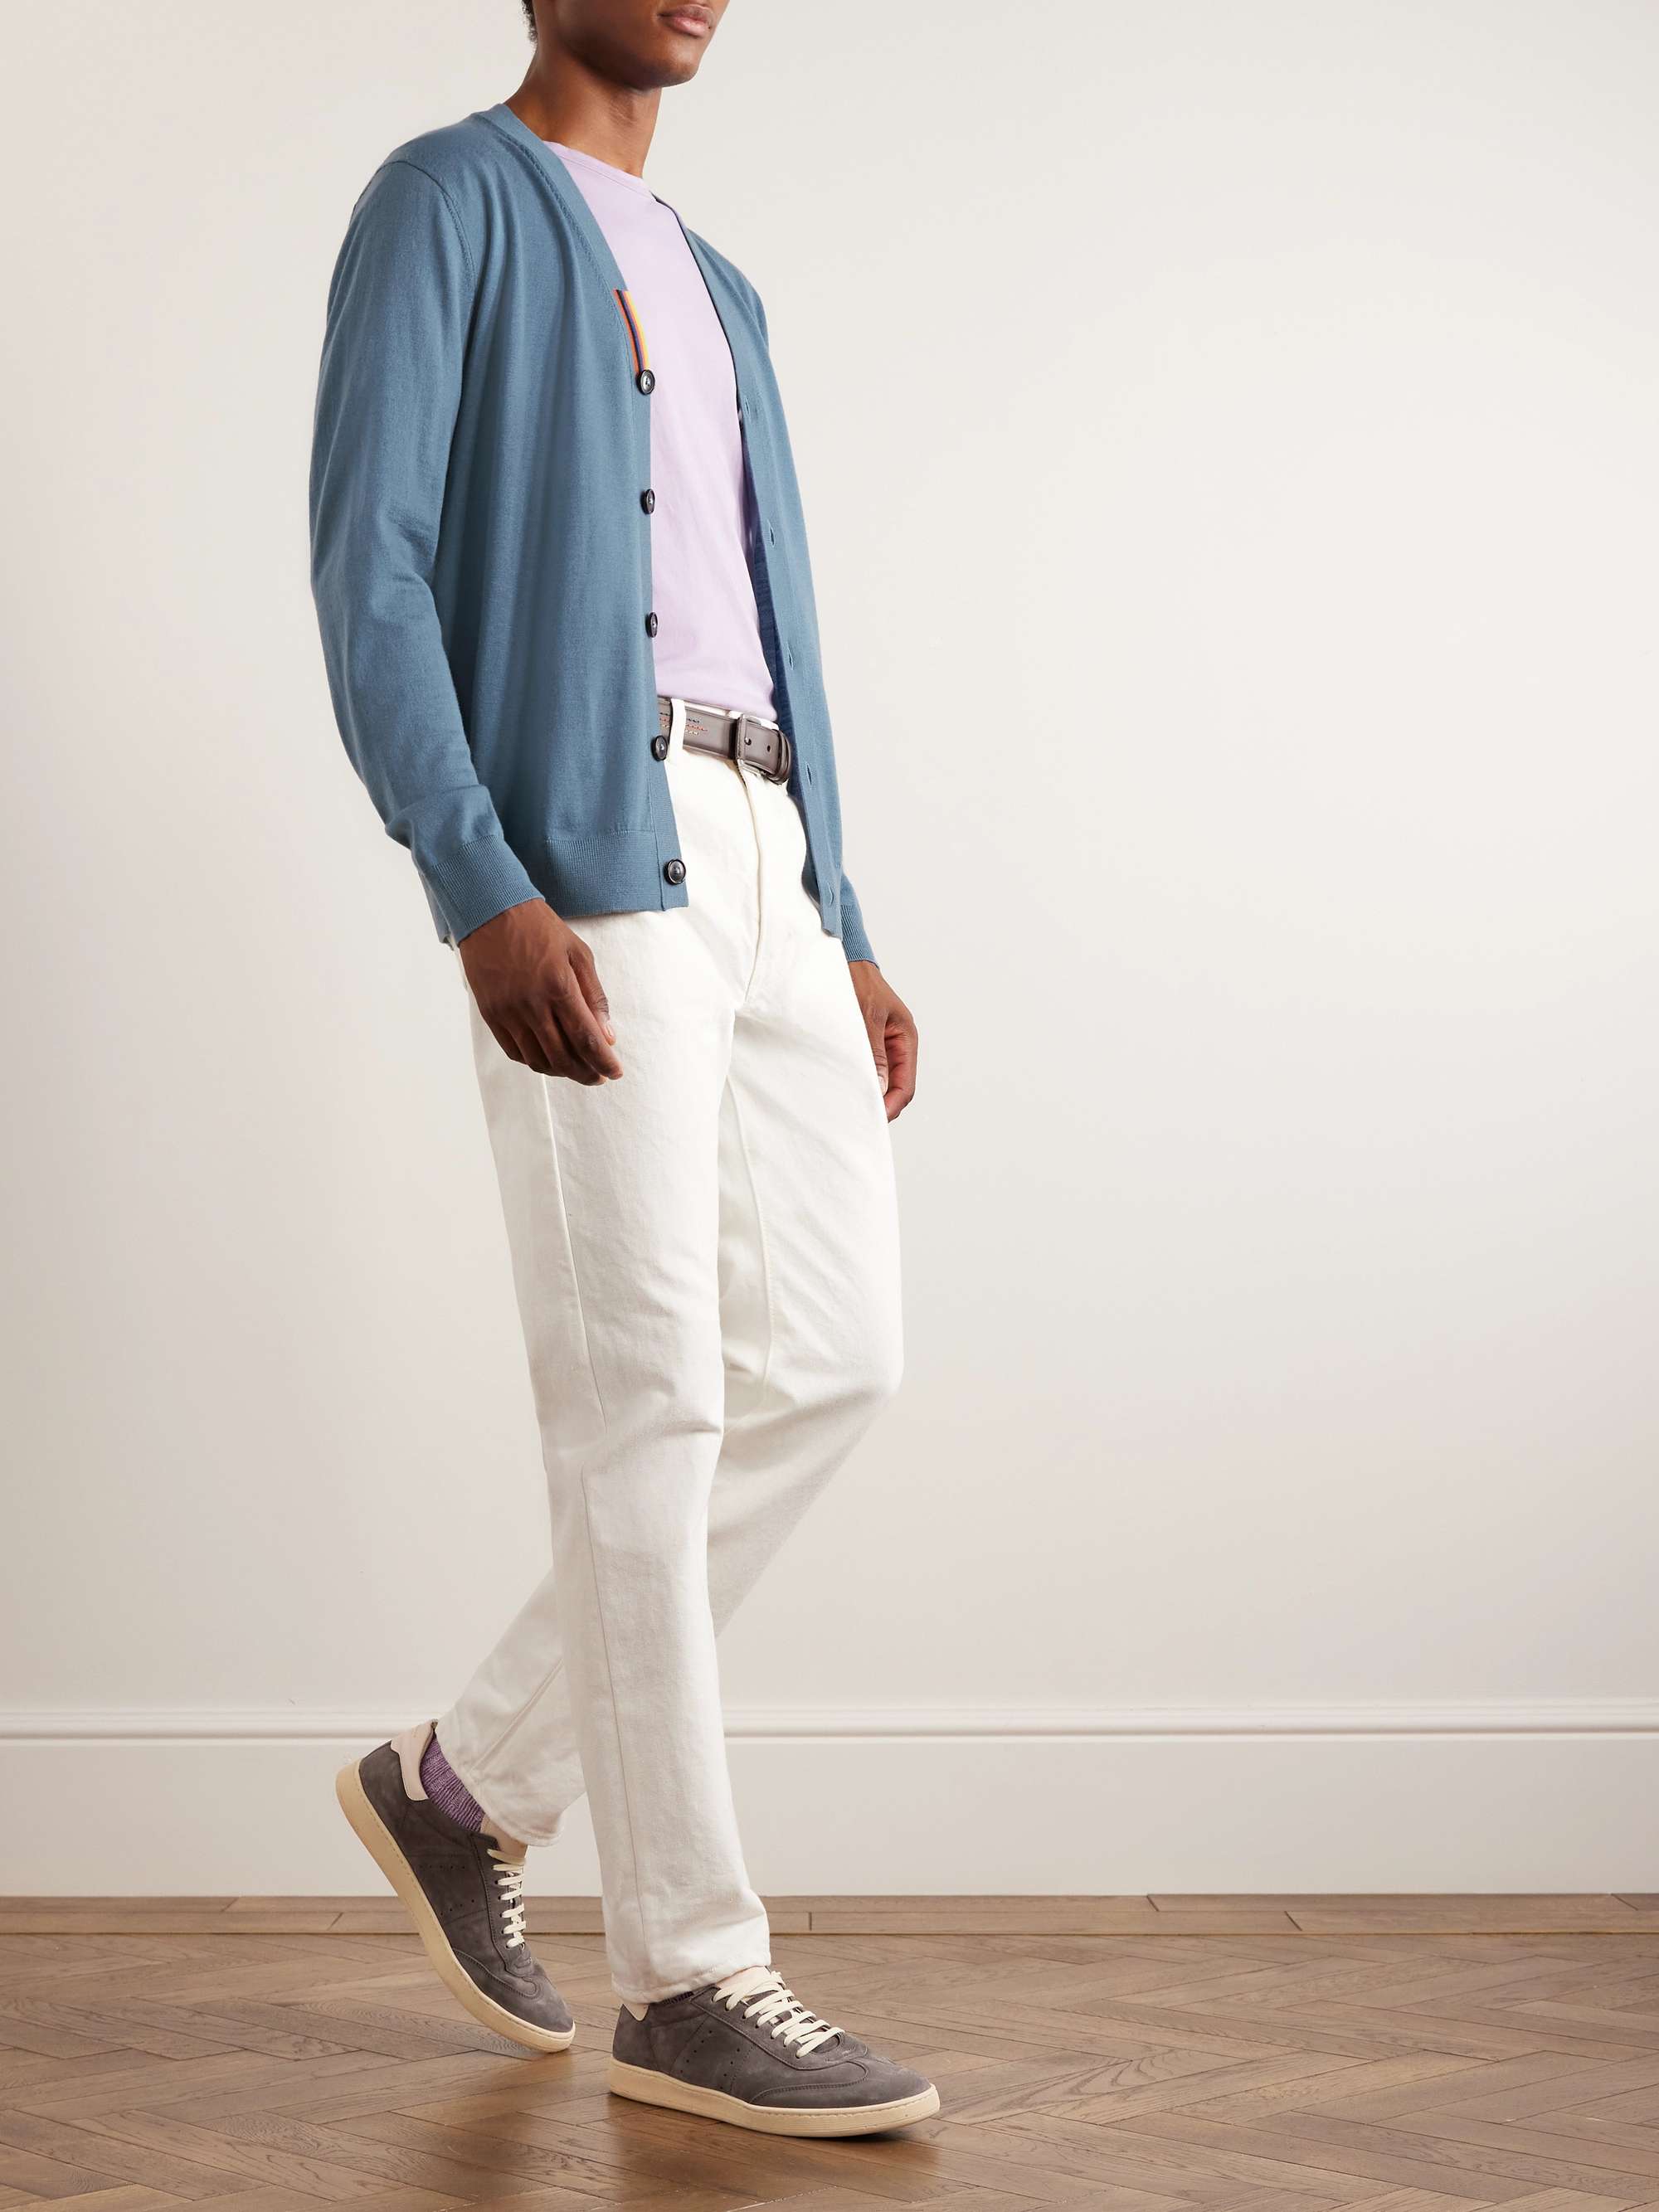 PAUL SMITH Slim-Fit Striped Merino Wool Cardigan for Men | MR PORTER